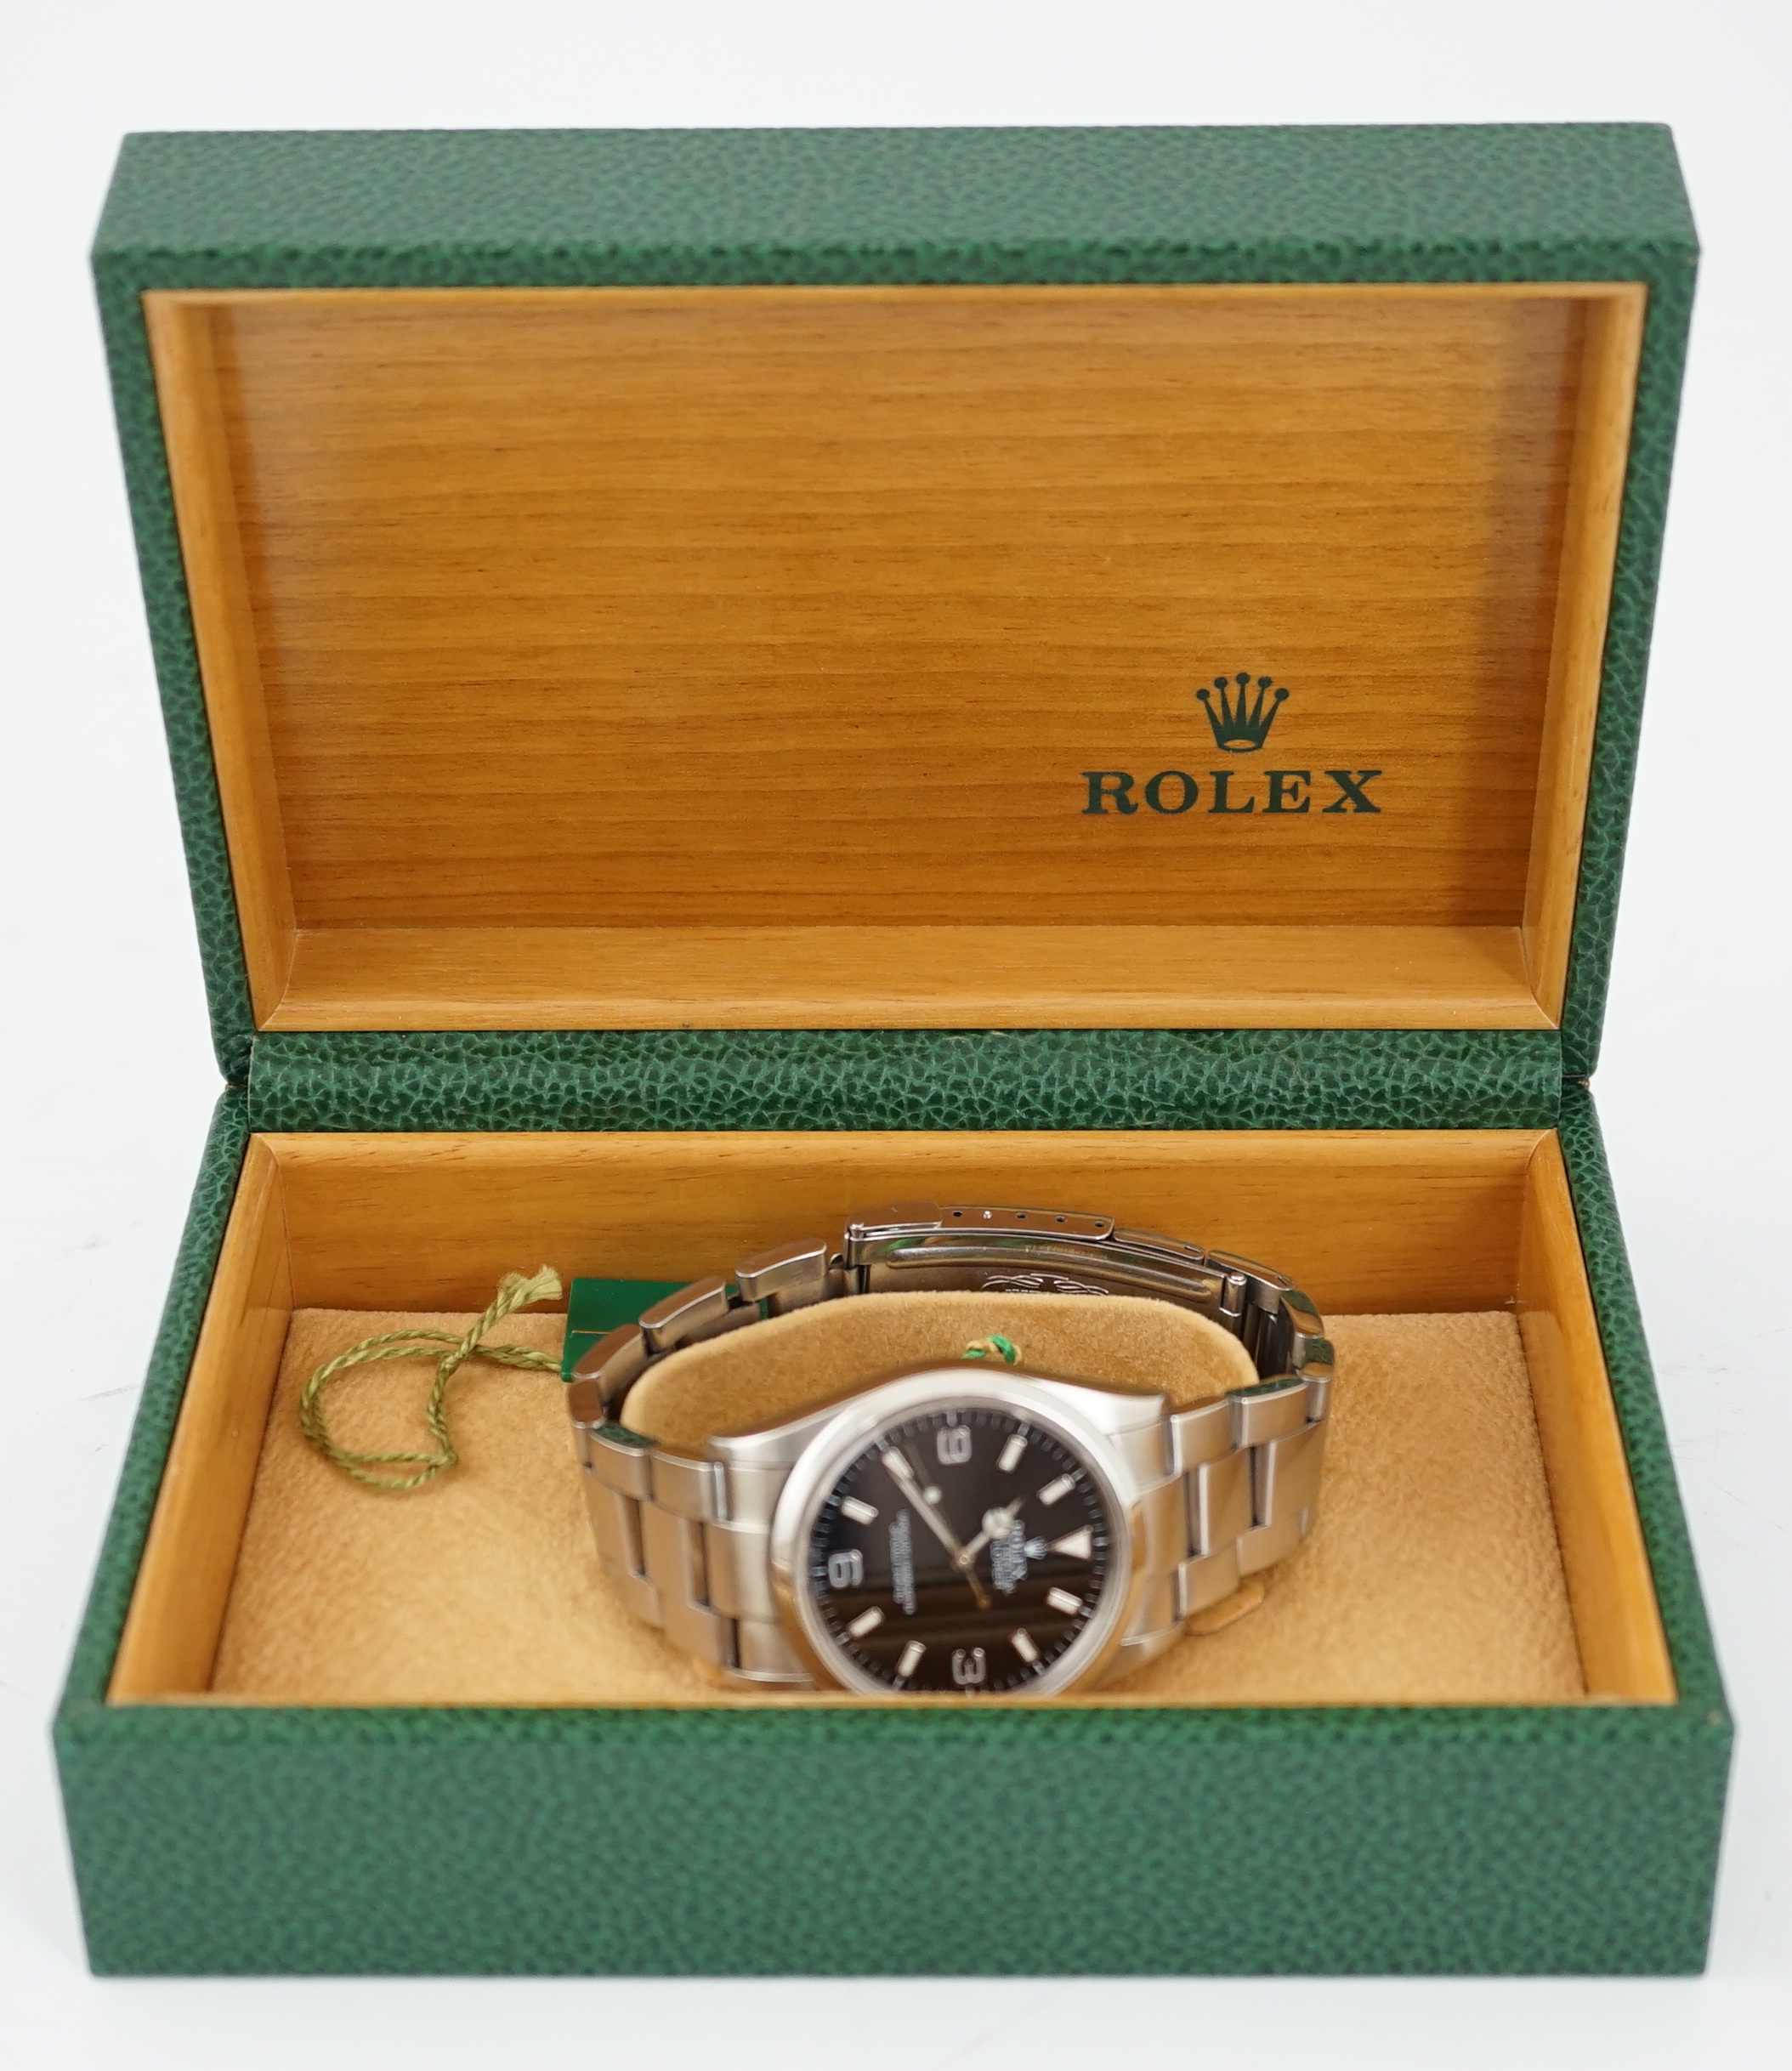 A gentleman's 2004 stainless steel Rolex Oyster Perpetual Explorer wrist watch